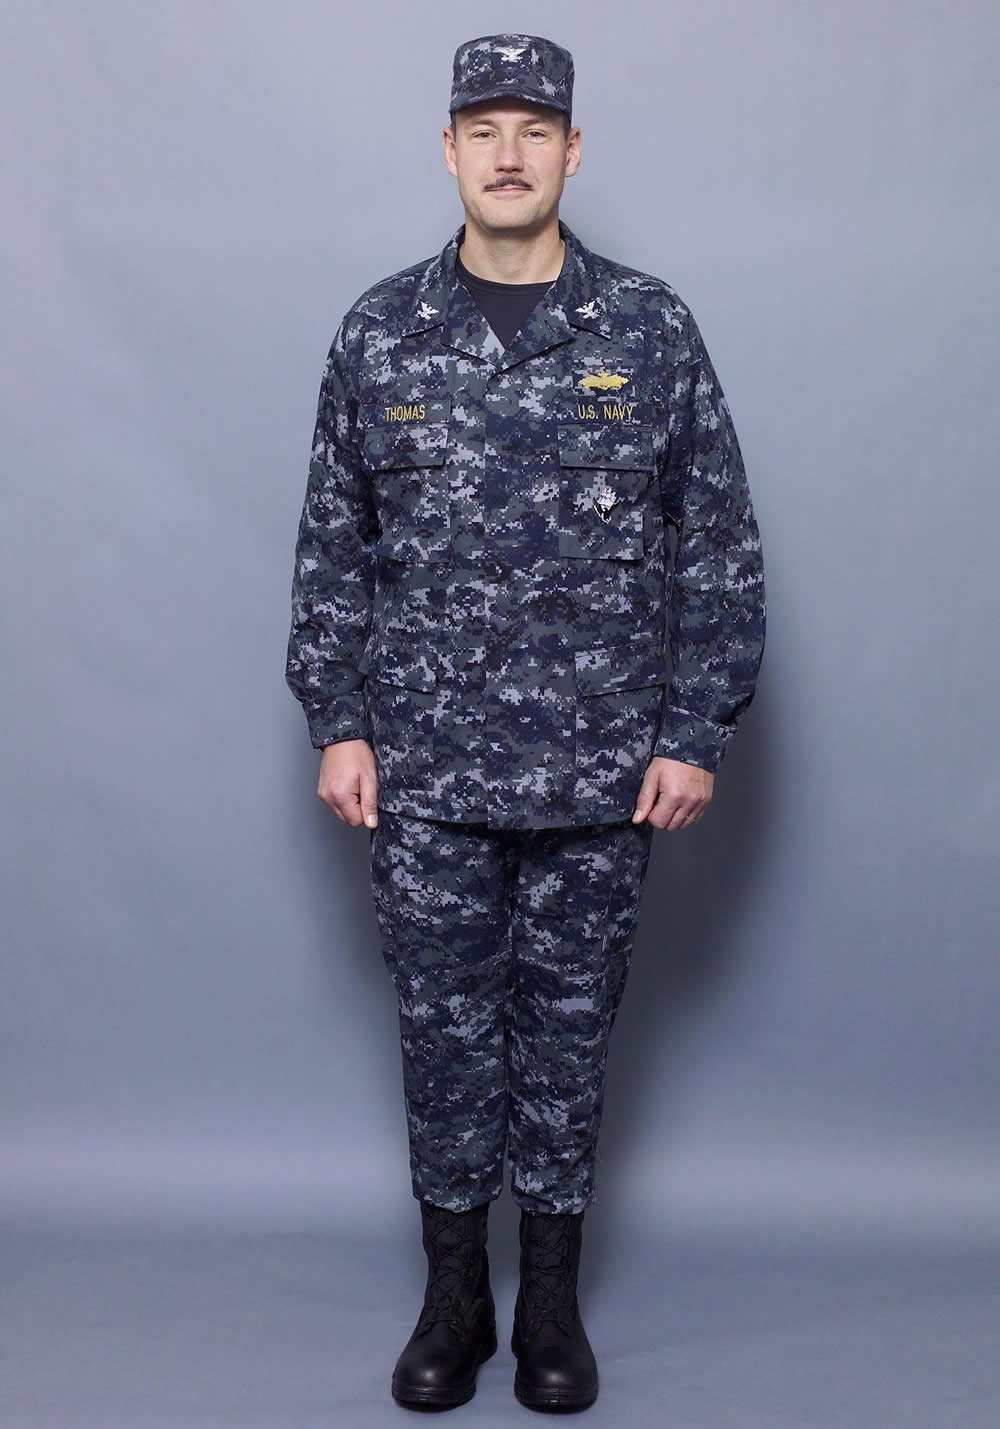 New Navy Uniform 86